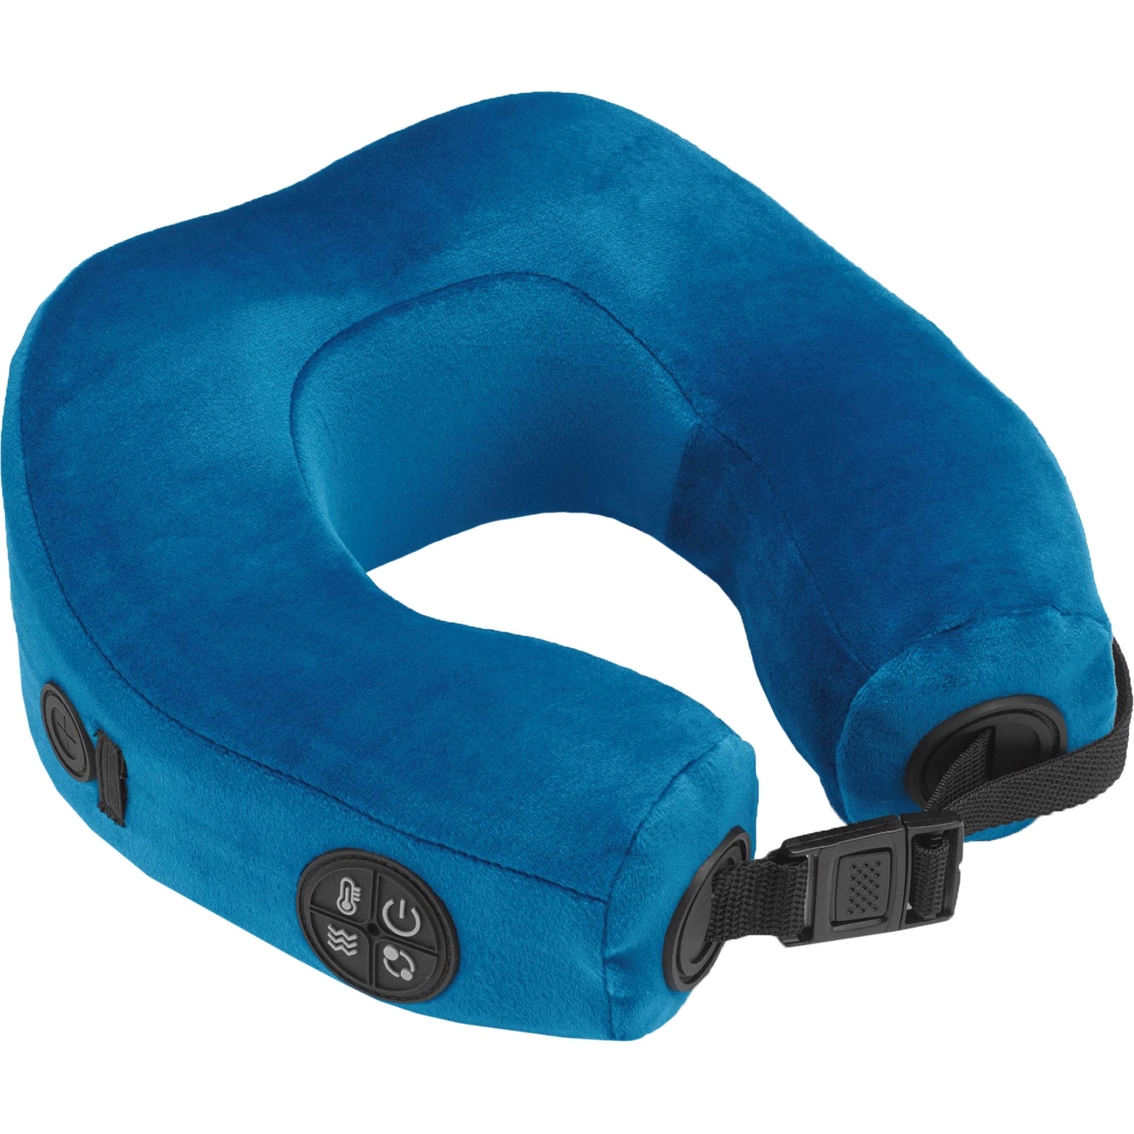 Conair Cordless Neck Rest Pillow with Shiatsu, Heat & Vibration - Image 4 of 8